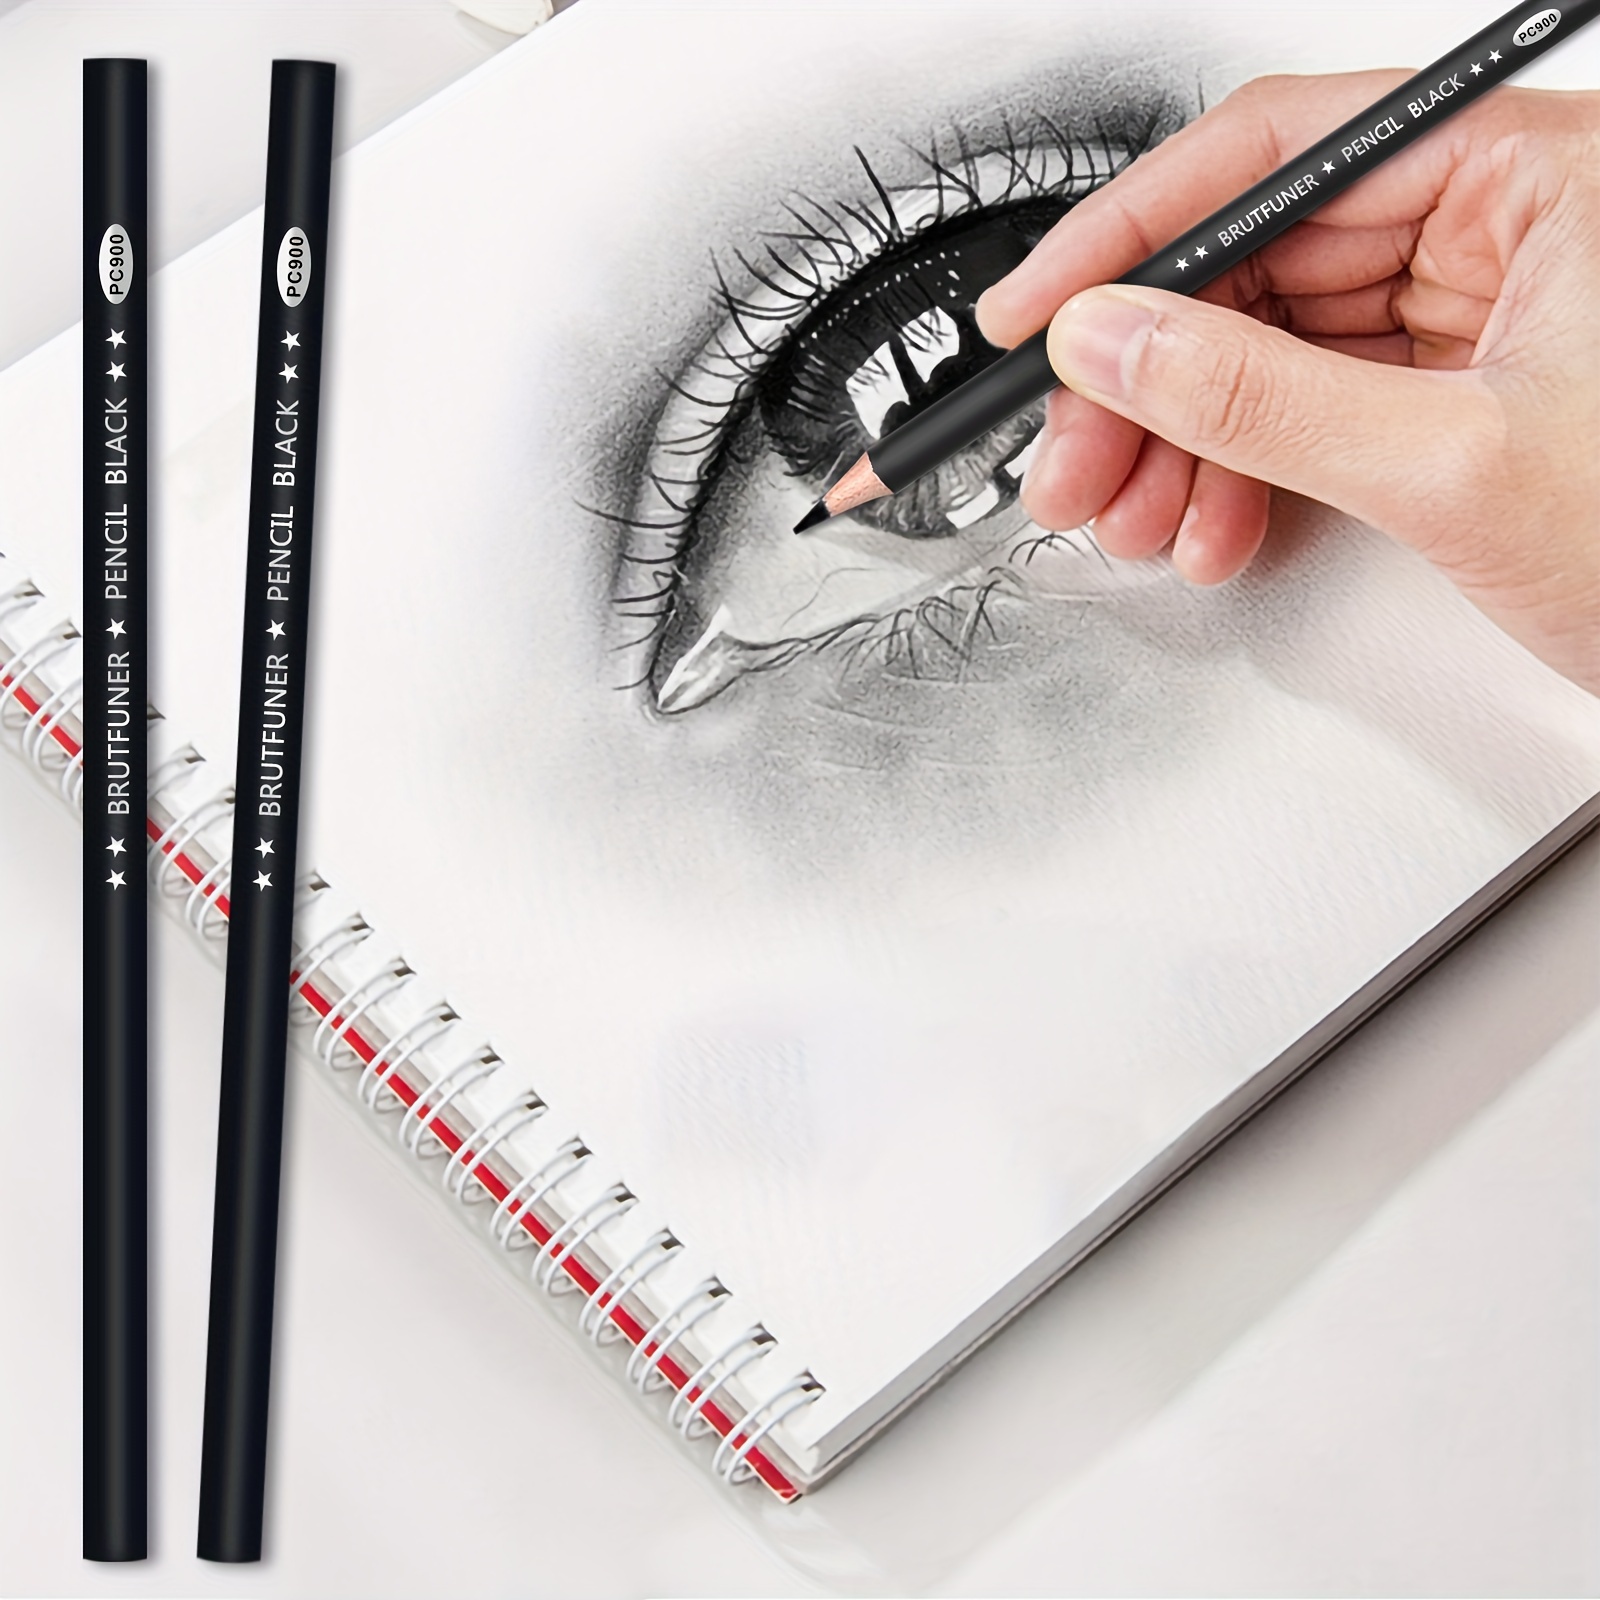 Charcoal Pencils, Sketch Highlight, Charcoal Pen